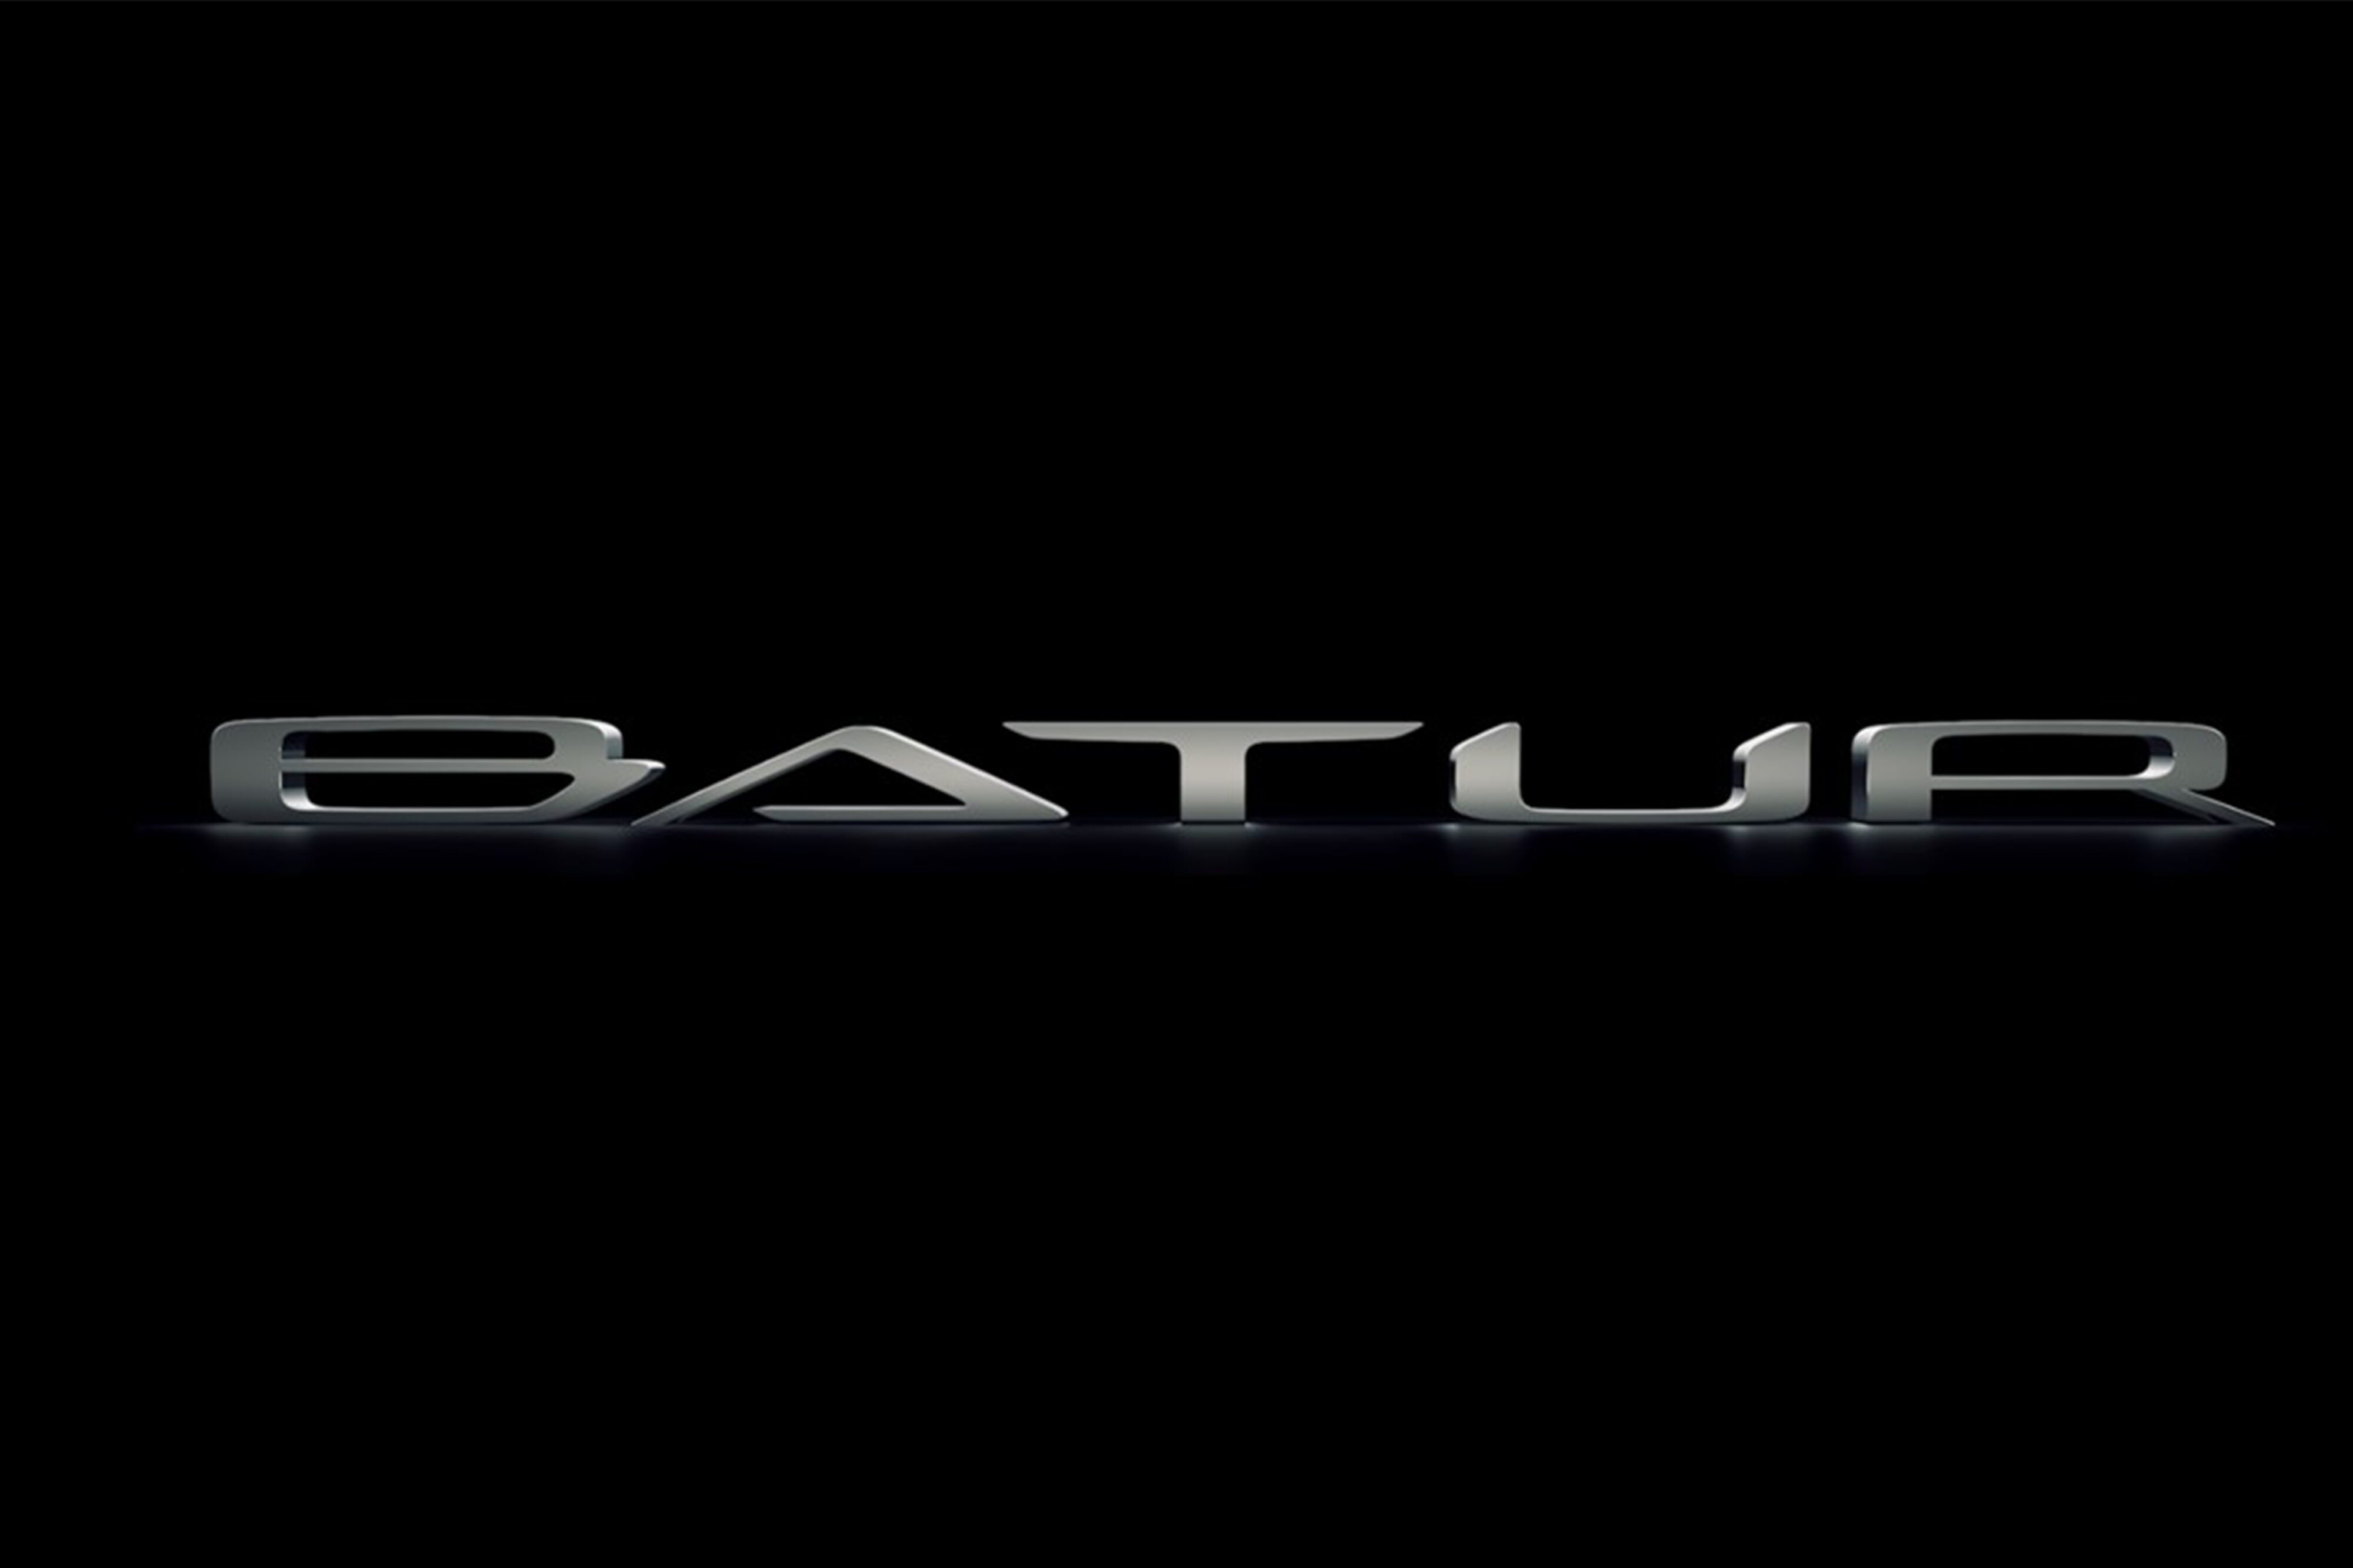 Batur logo from the new Bentley GT car